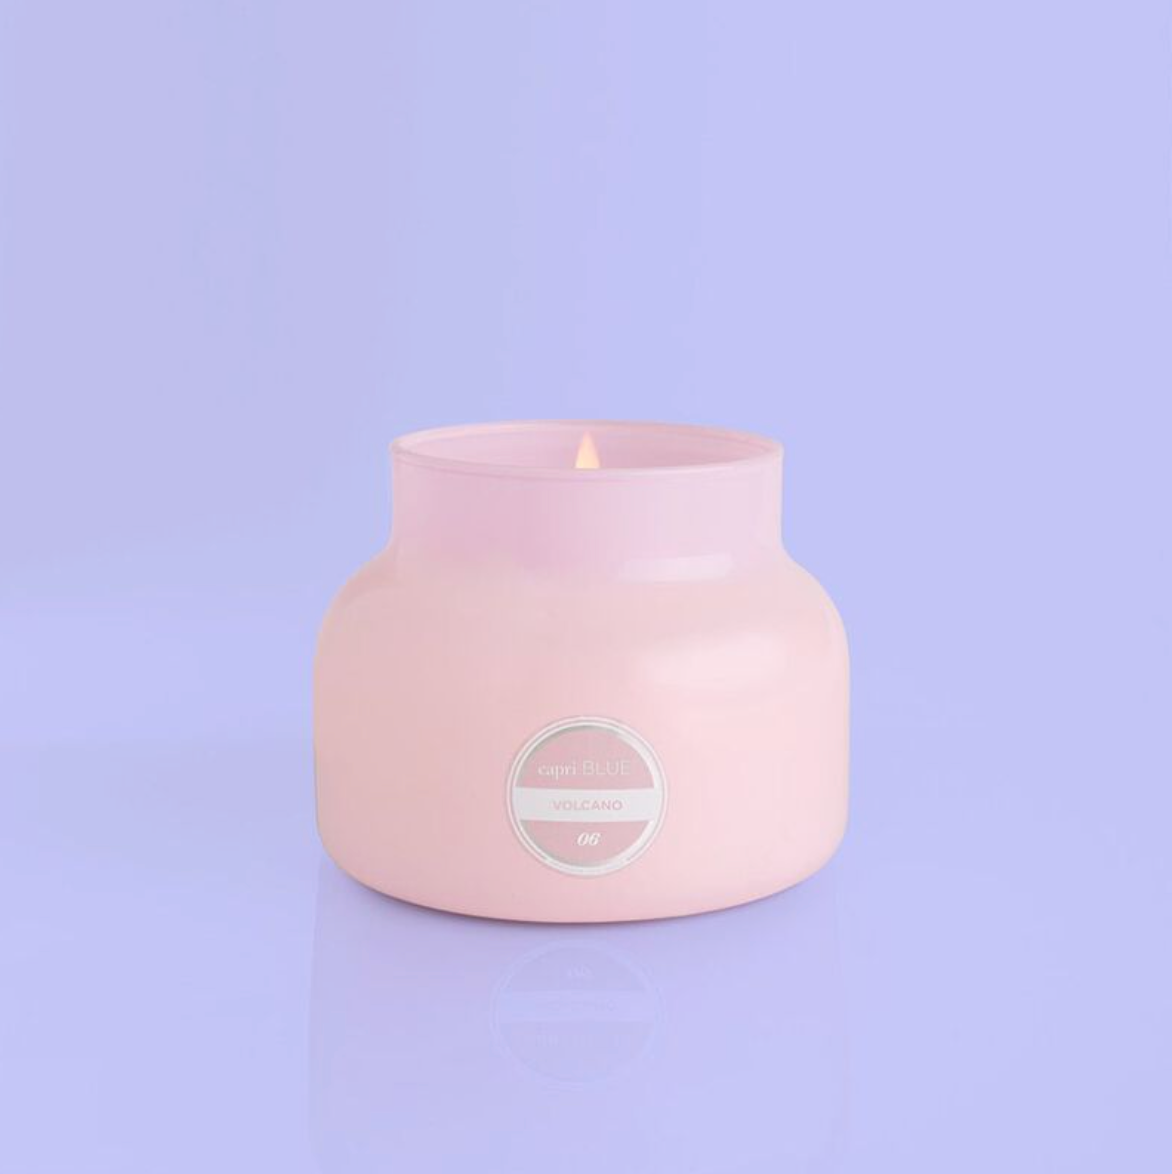 Capri Blue Volcano Bubblegum Signature Jar Candle 19oz - Favorite Little Things Co